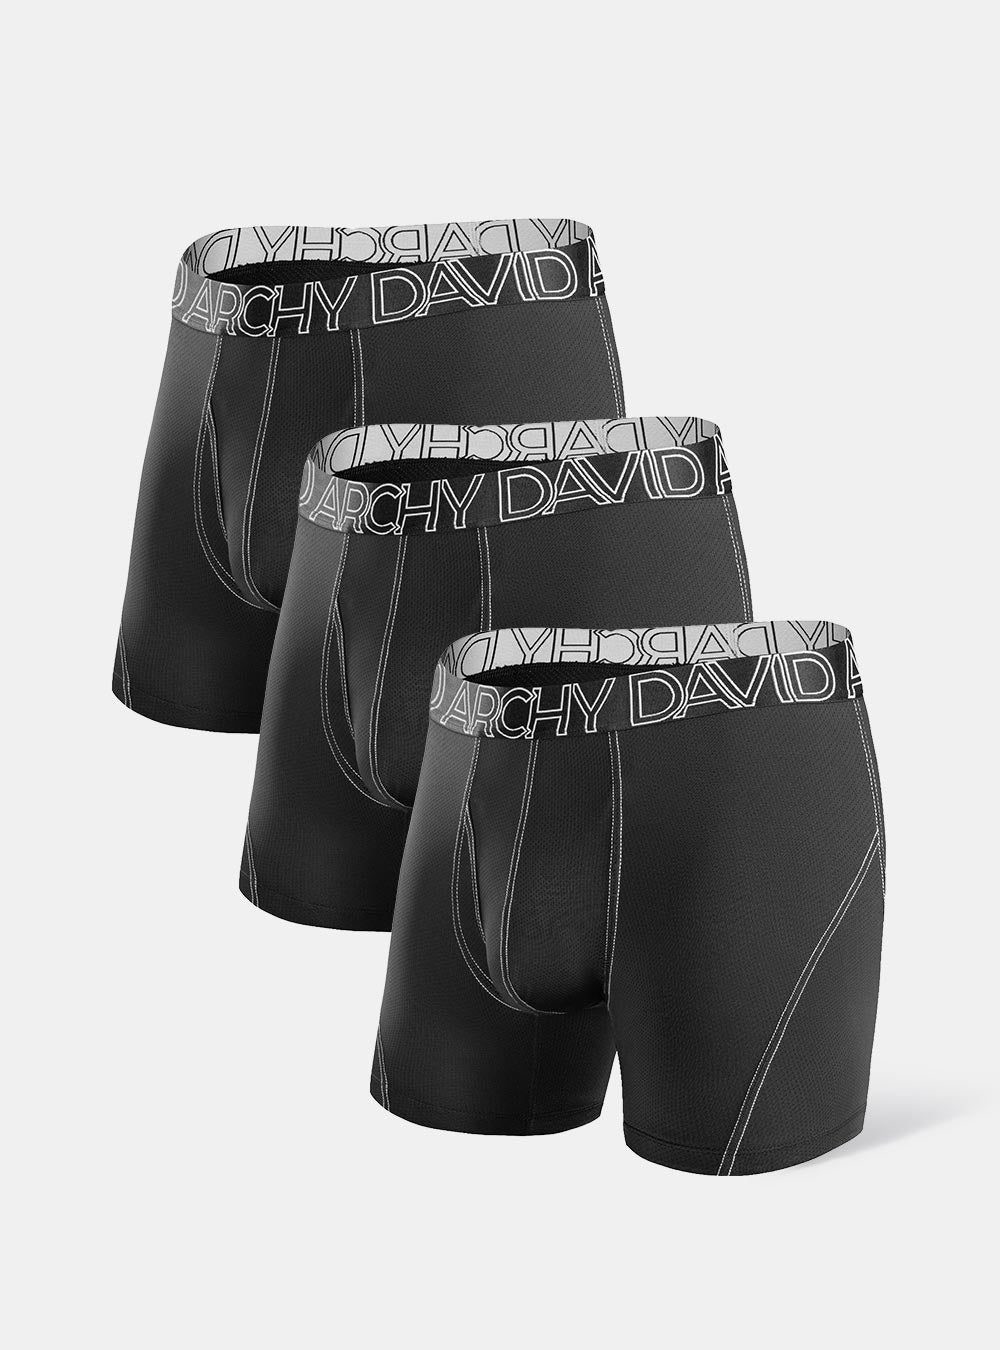 Buy 3 Pk Lightweight / Breathable Boxer Briefs Men's Loungewear